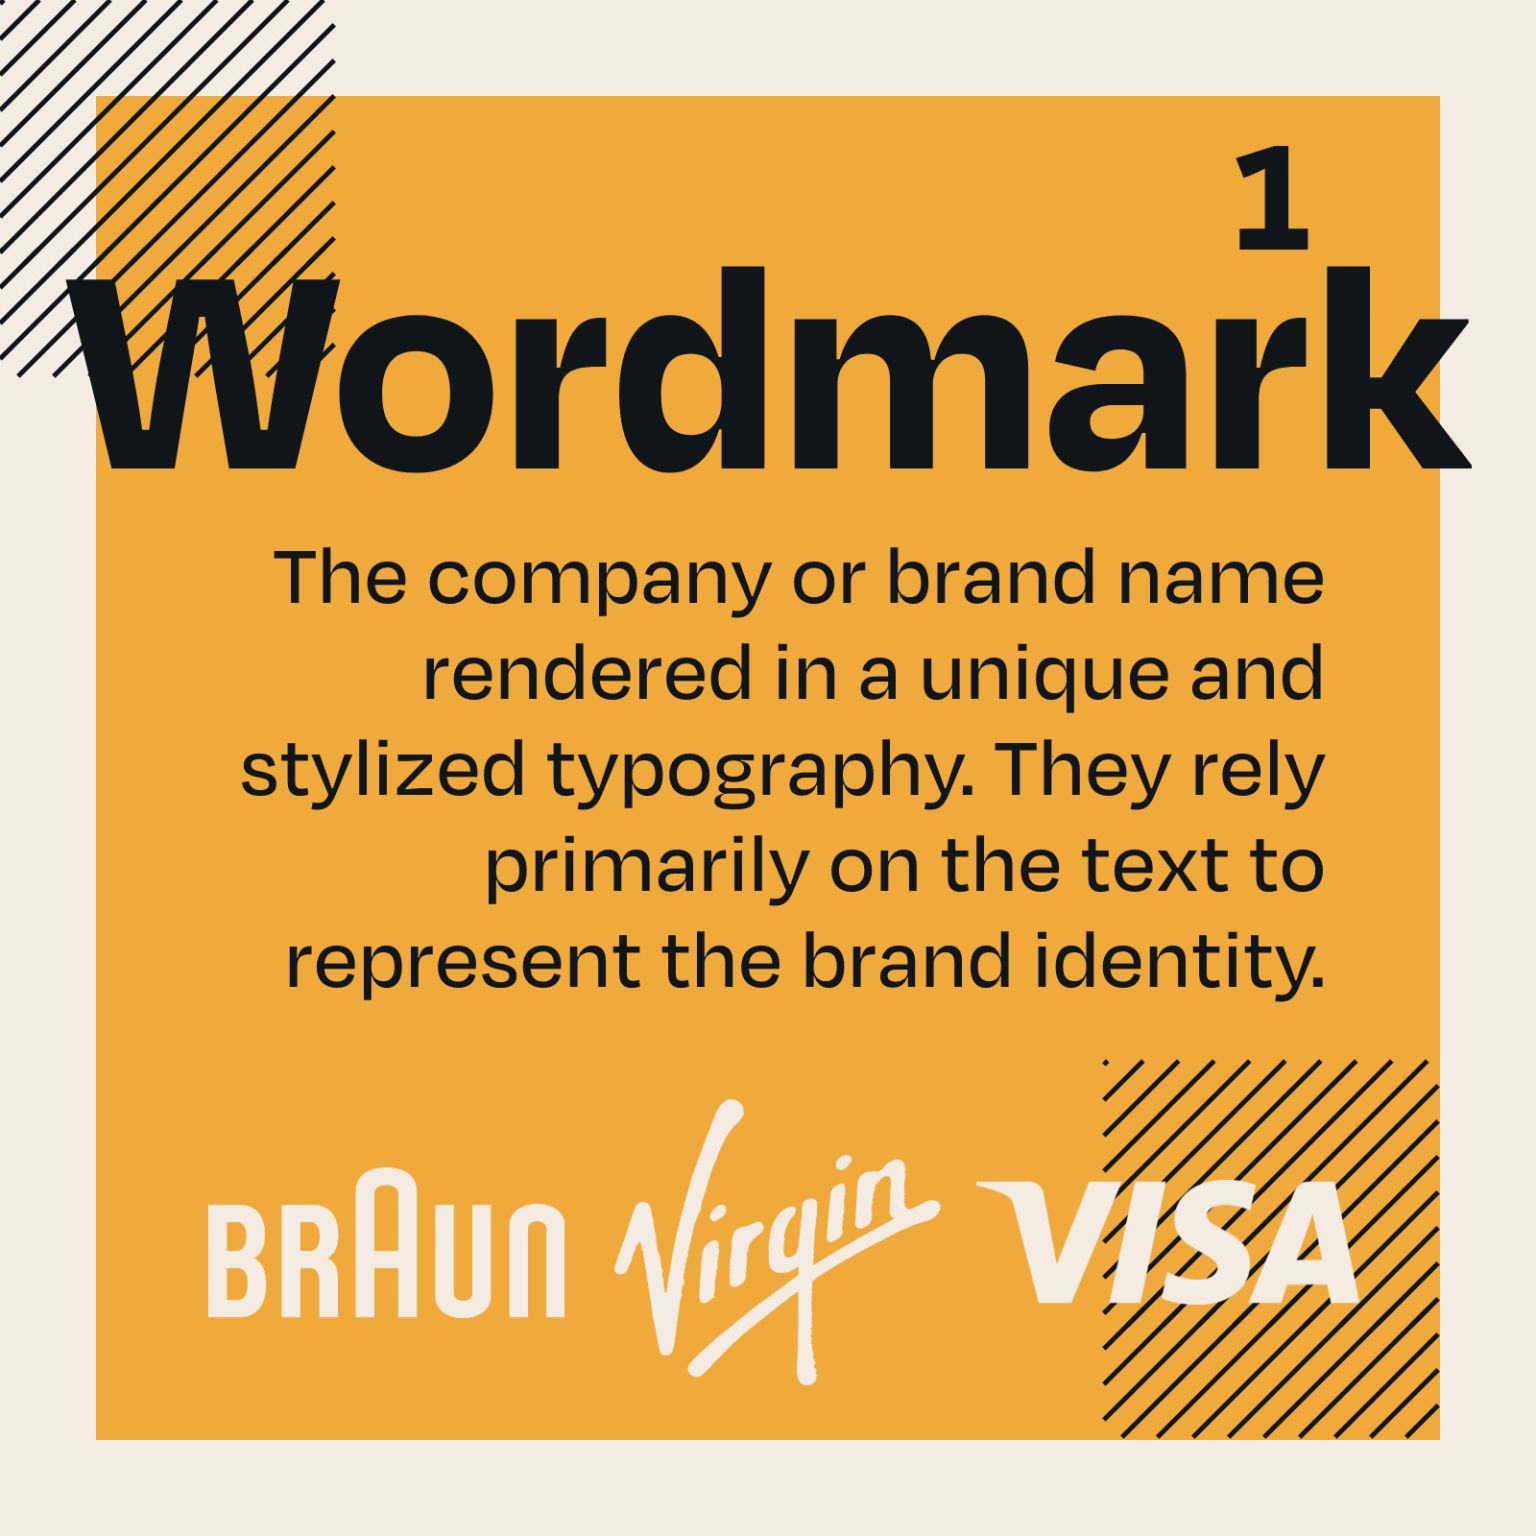 Types Of Logos - Wordmark